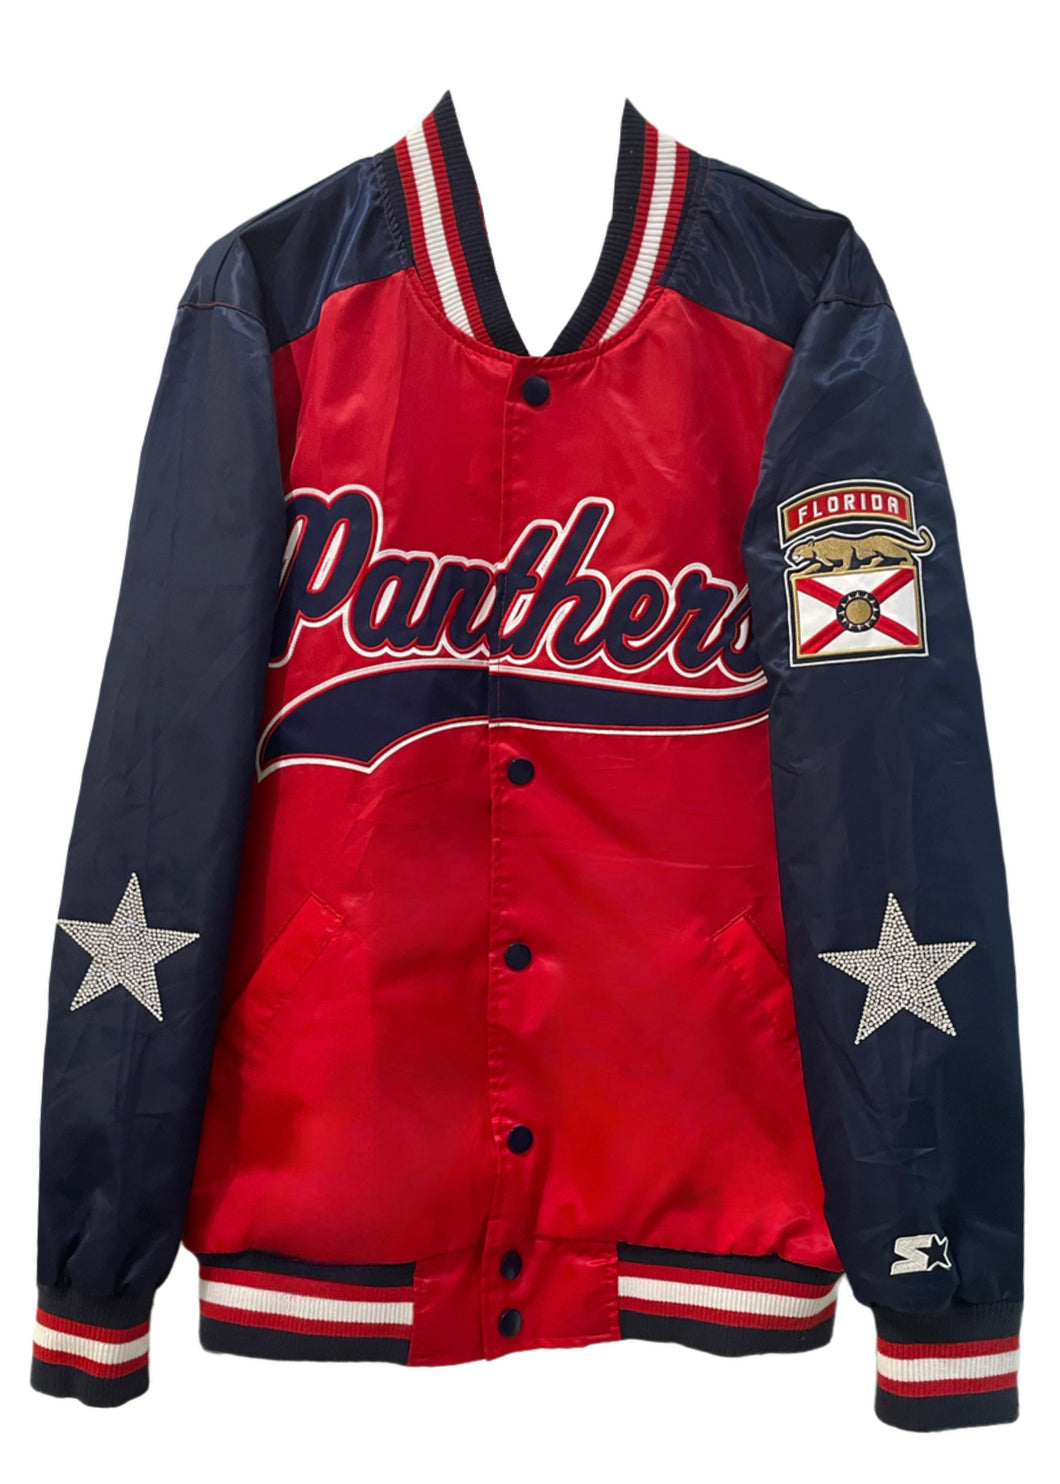 Florida Panthers, Hockey One of a KIND Vintage Starter Jacket with Crystal Star Design